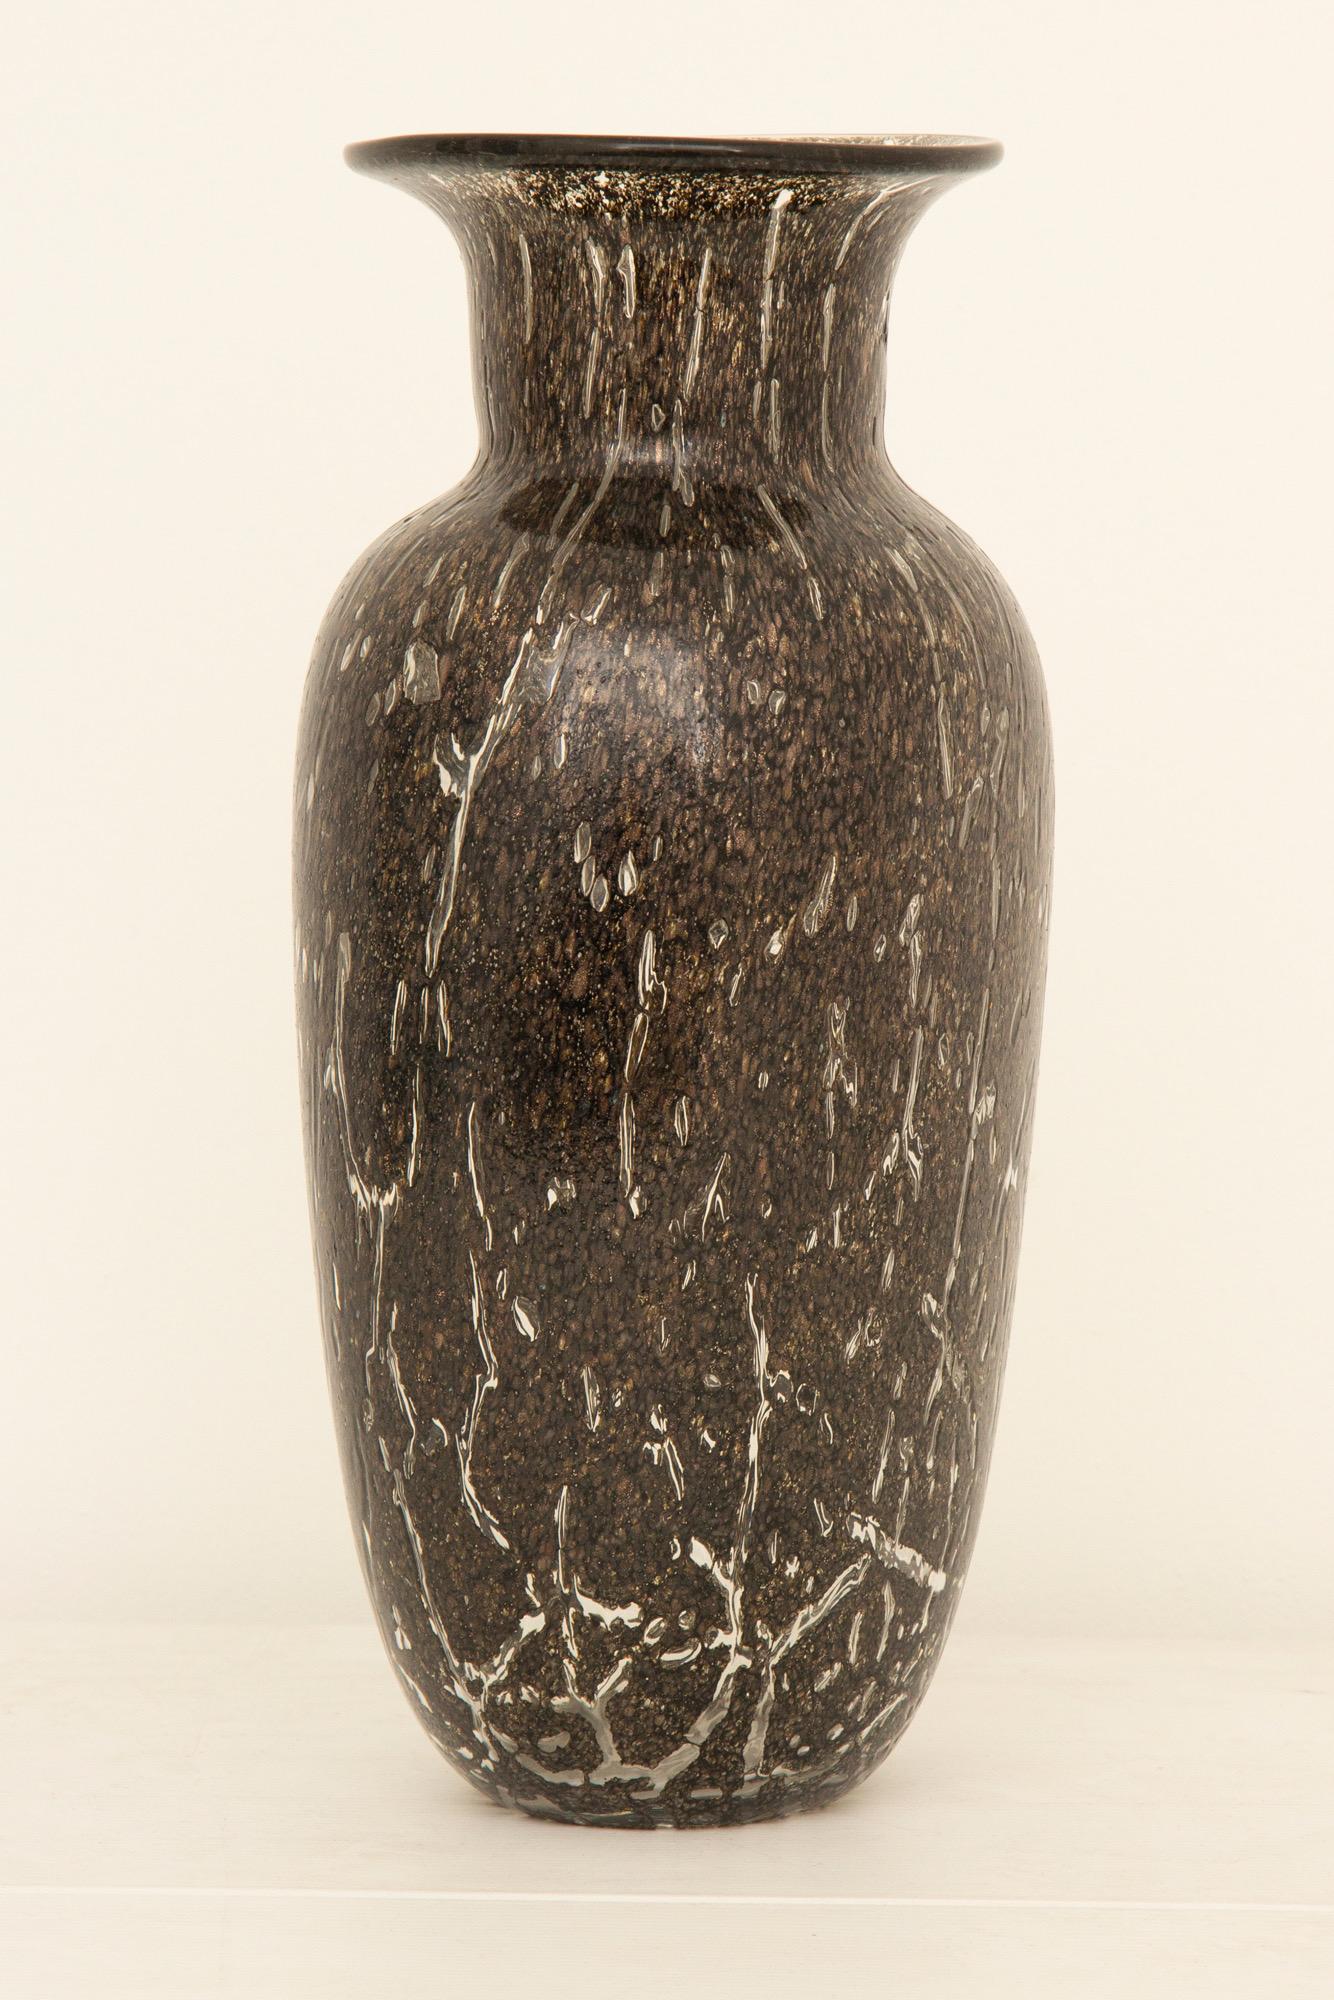 Midcentury Vase Signed Barovier and Toso for Murano (20. Jahrhundert)